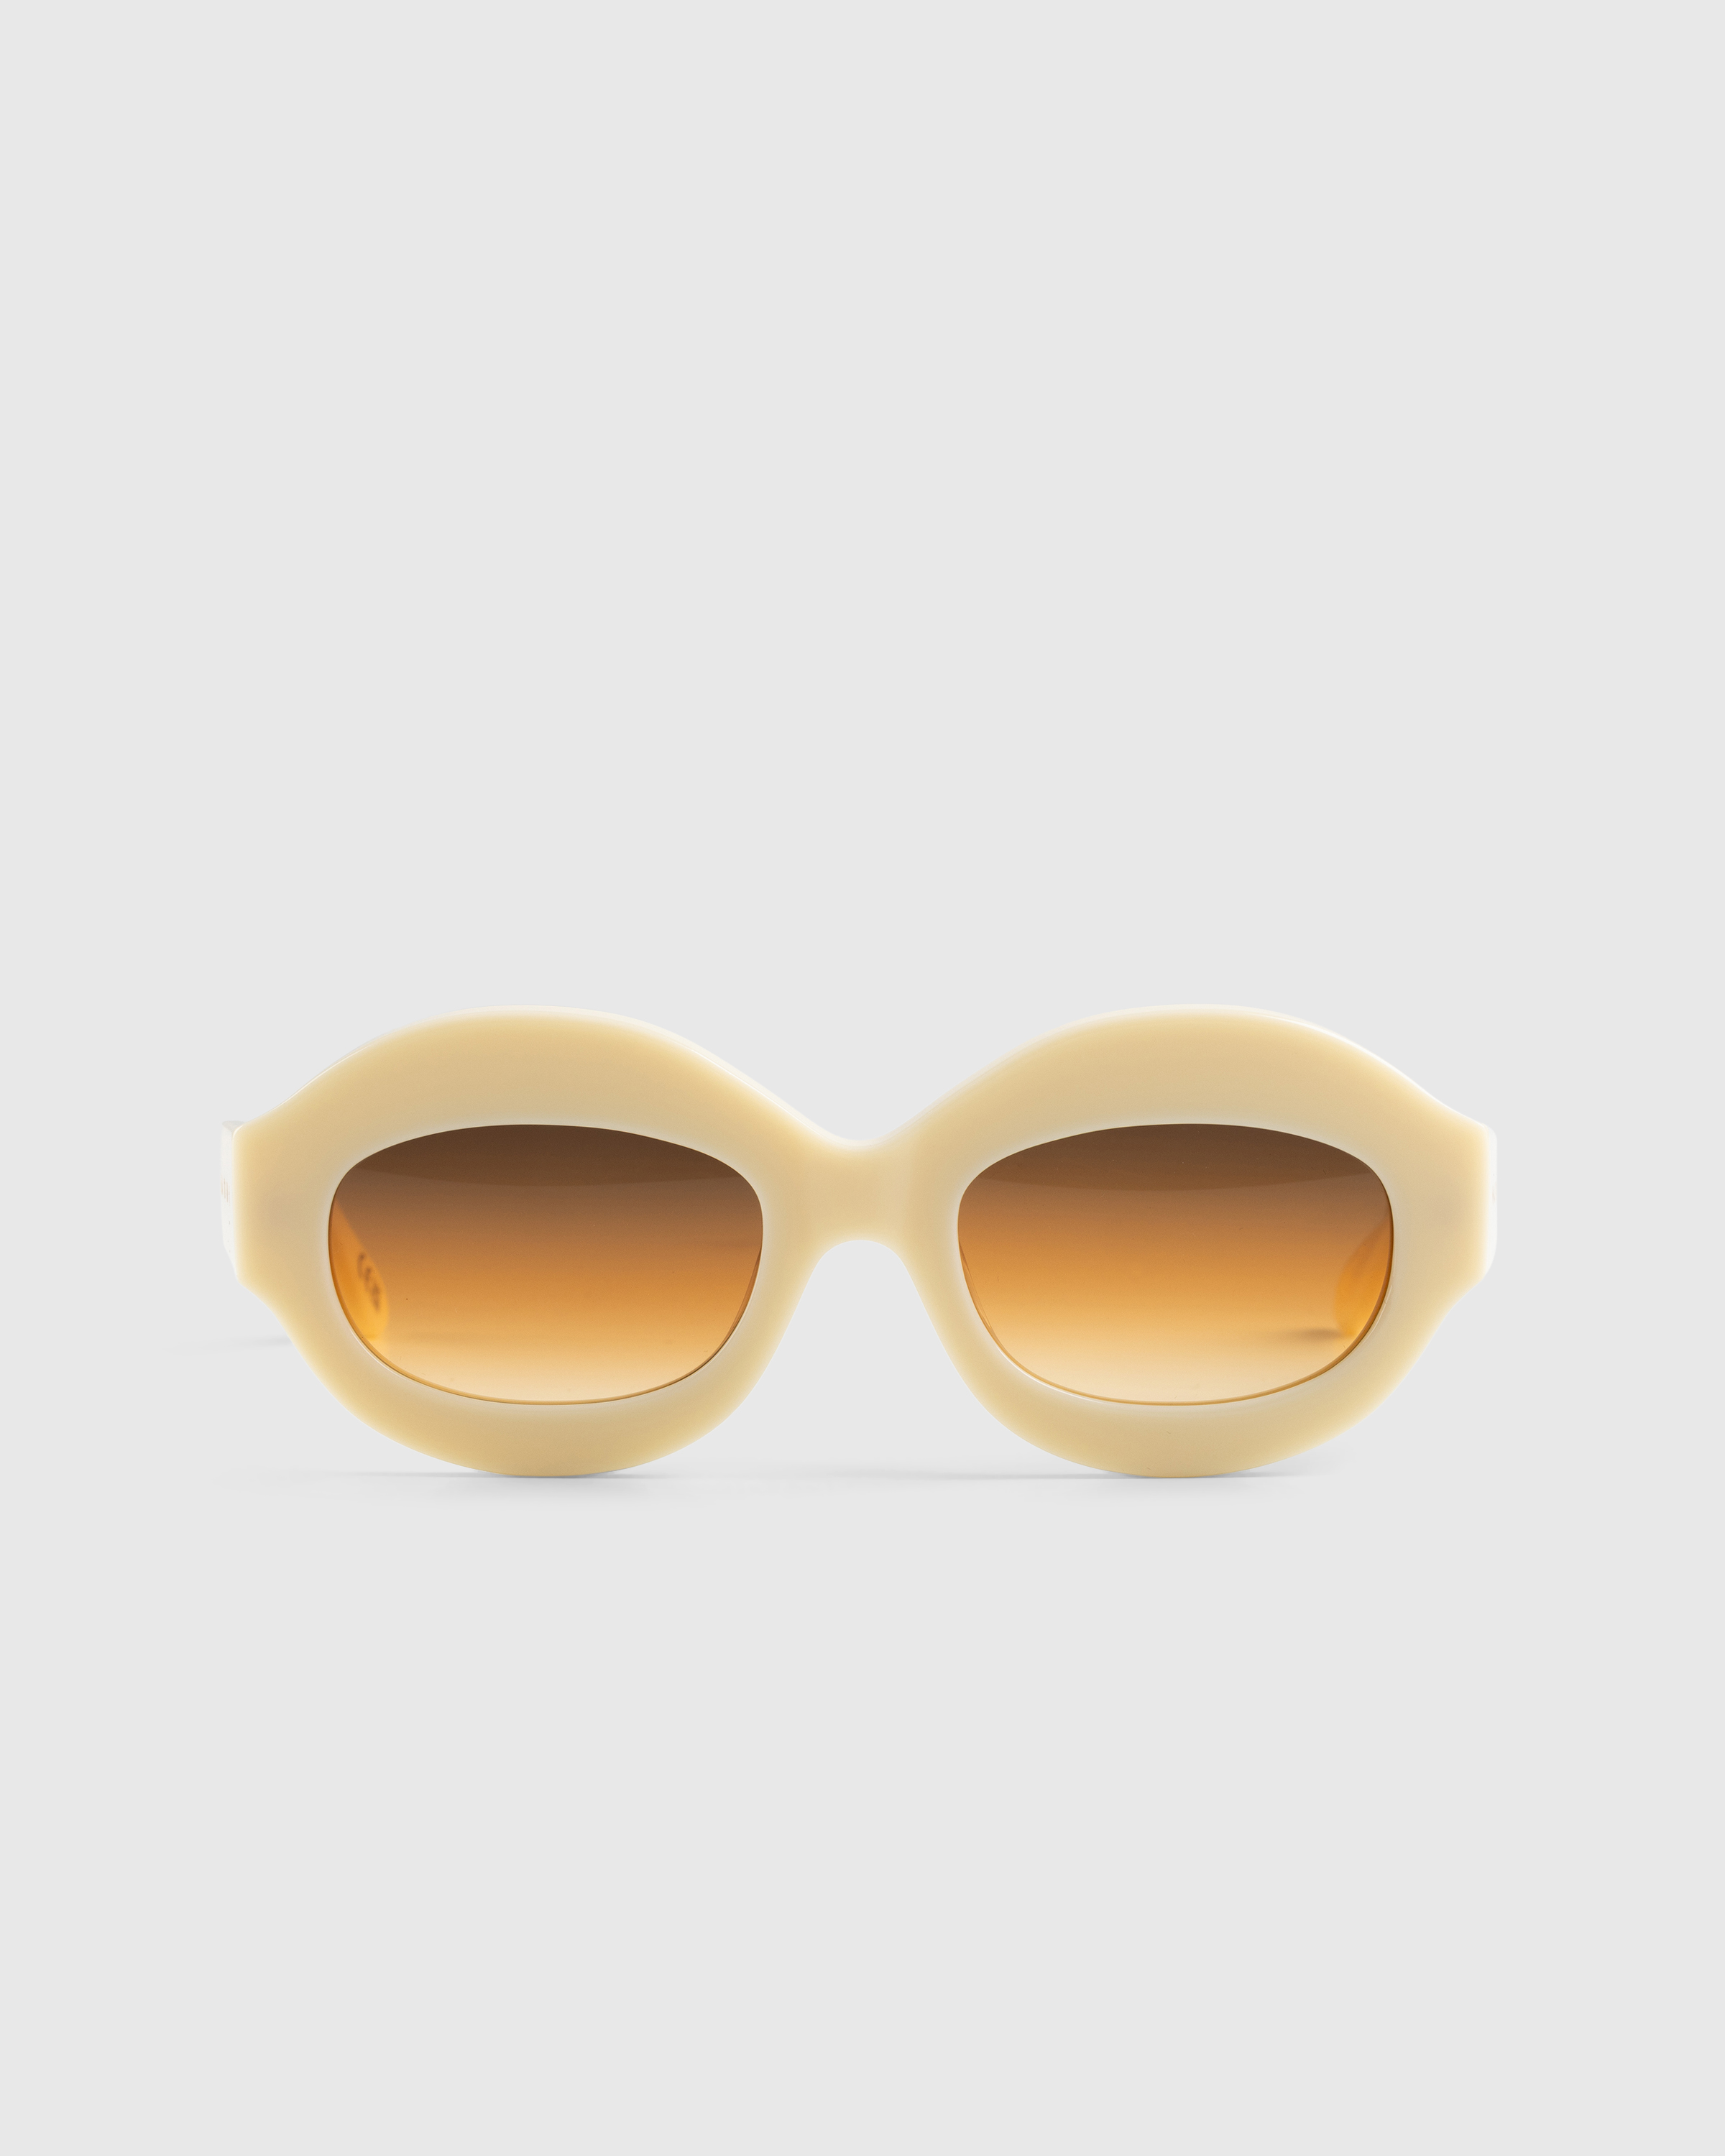 Marni x retrosuperfuture – Ik Kil Cenote Panna - Sunglasses - Beige - Image 1